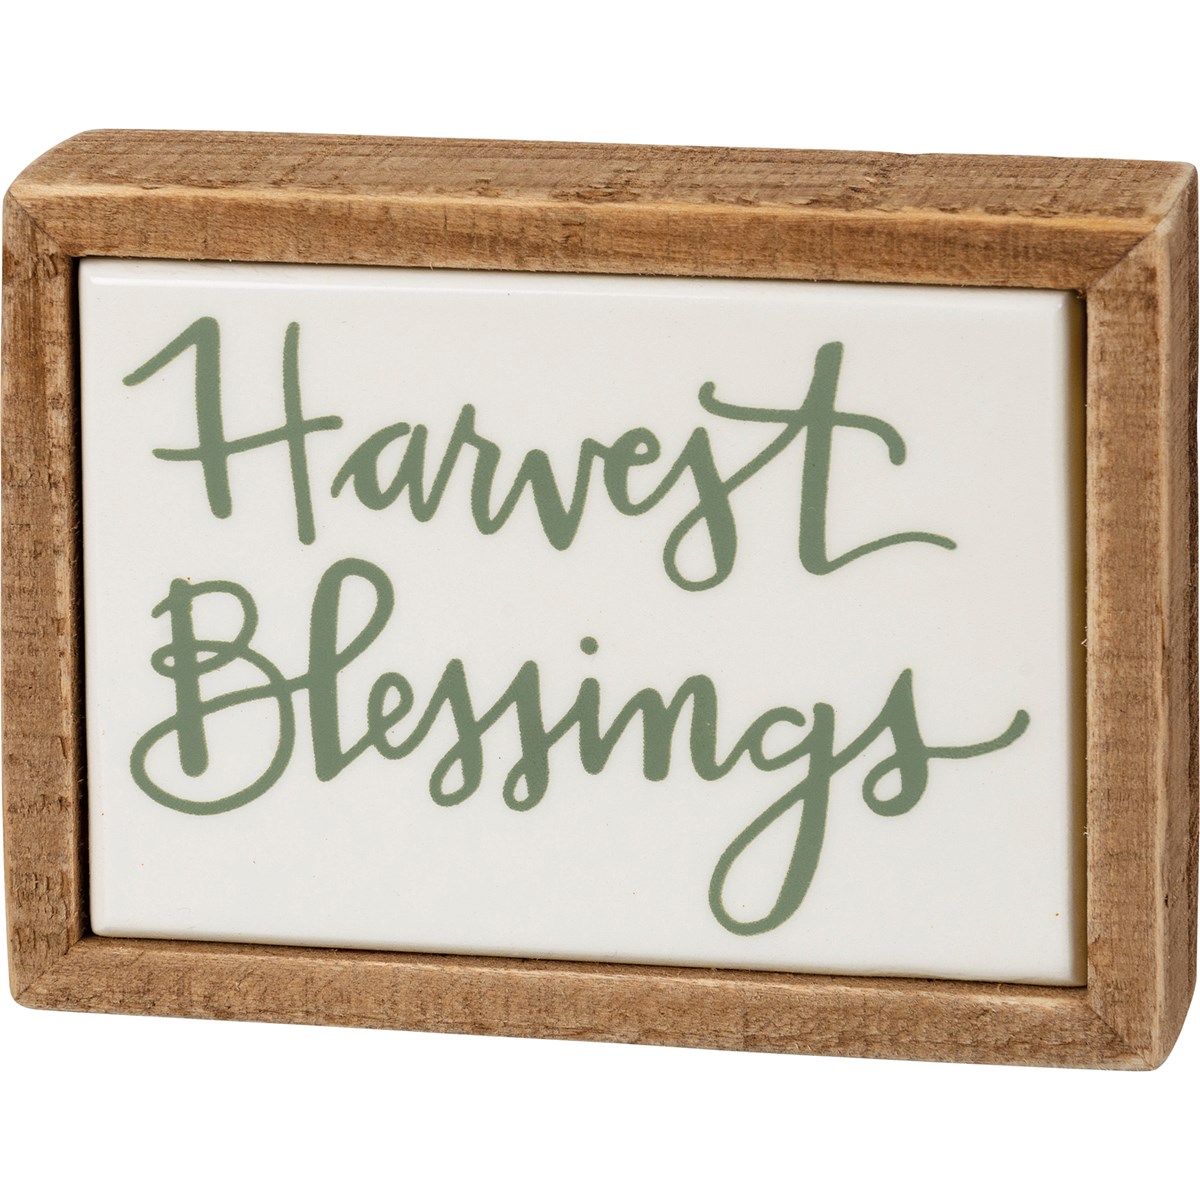 Harvest Blessings Box Sign Mini - Wood